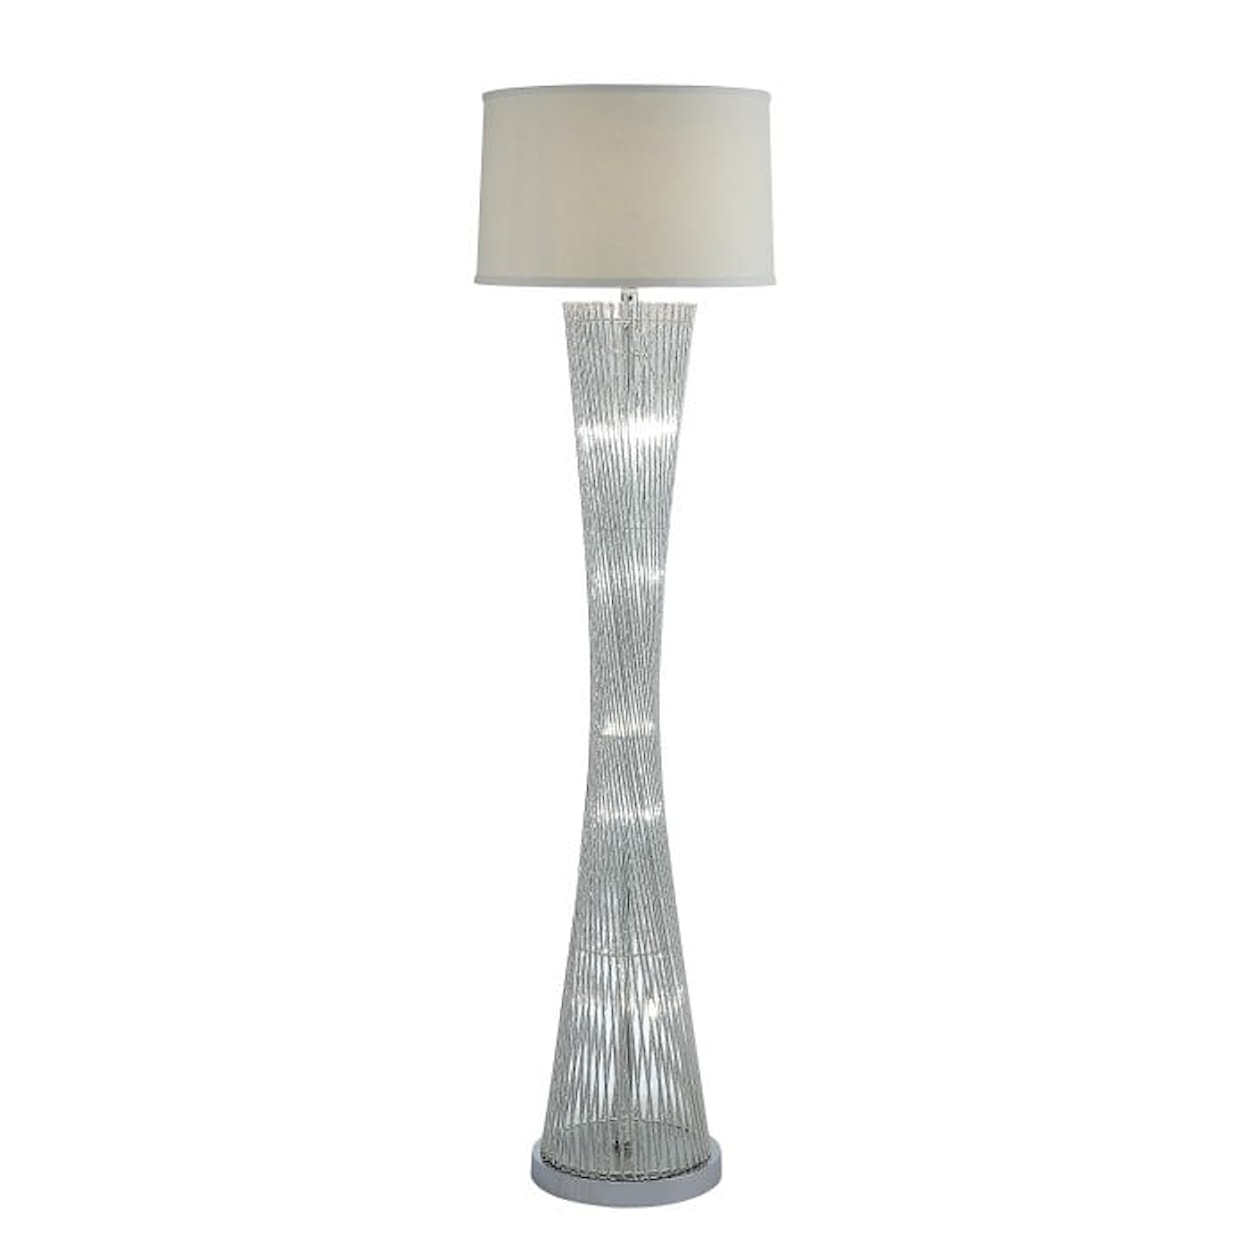 Homelegance Furniture Crocus Floor Lamp